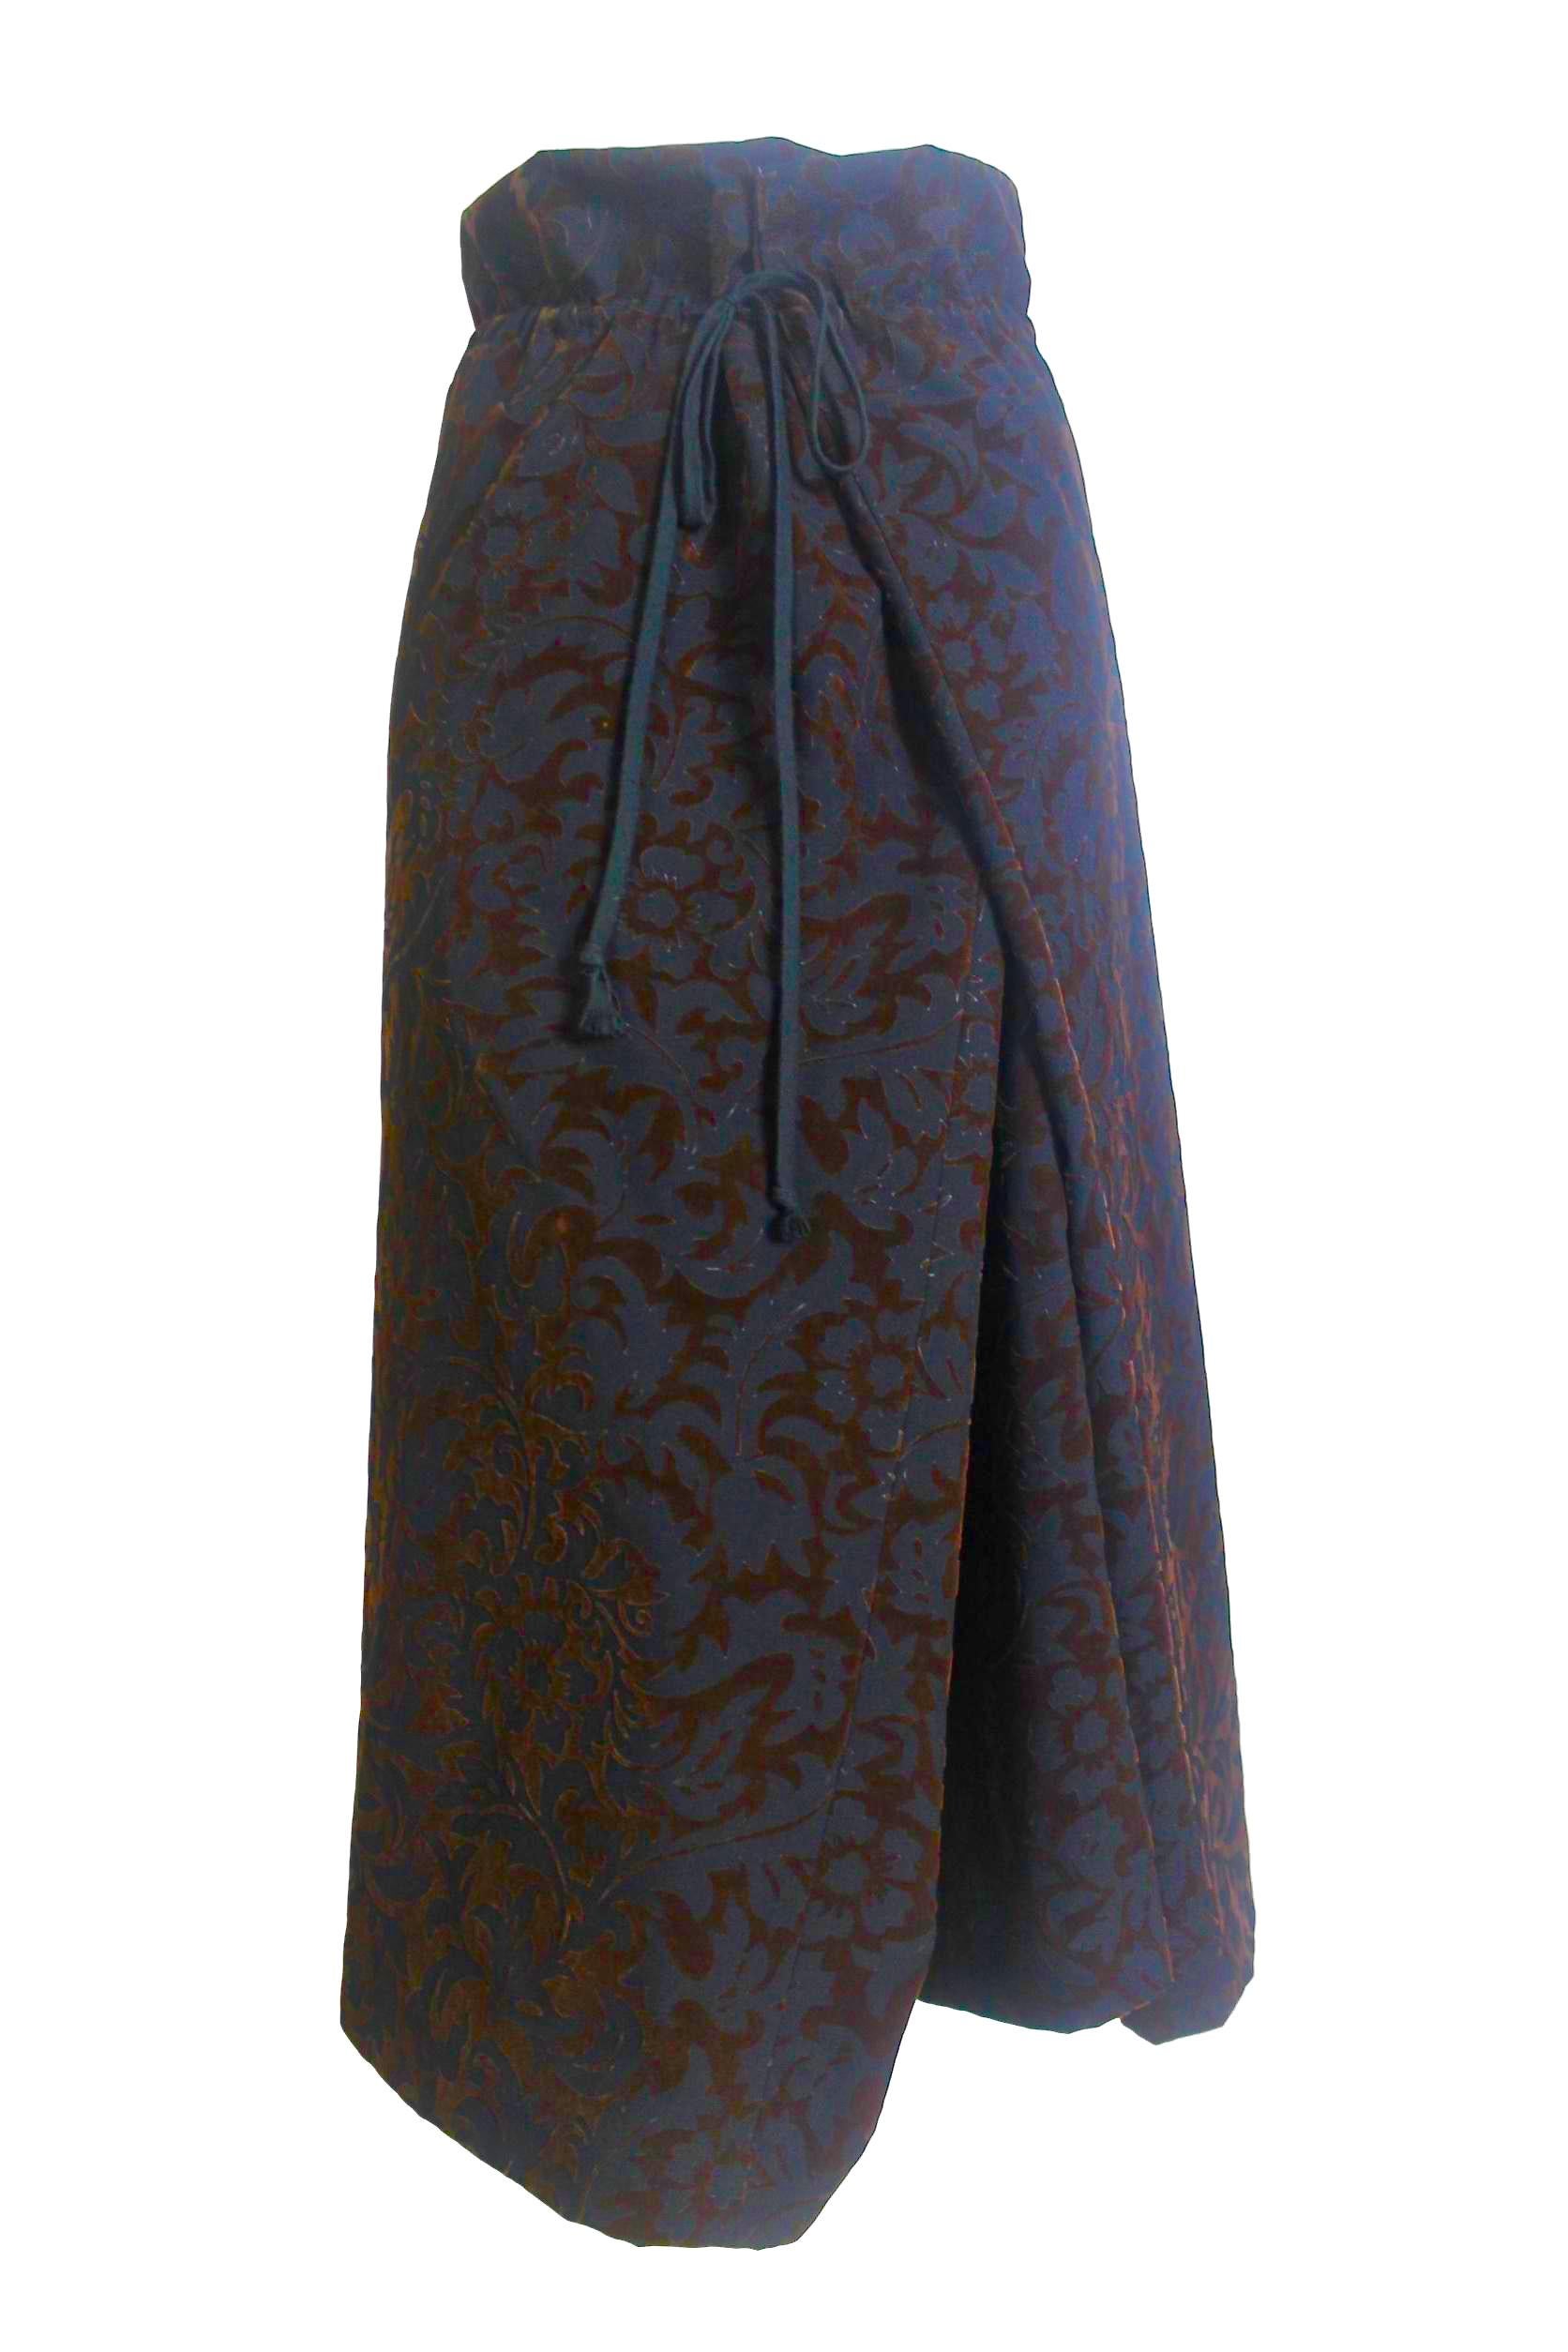 Comme des Garcons Flat Envelope Wool Skirt AD 1996 For Sale 3